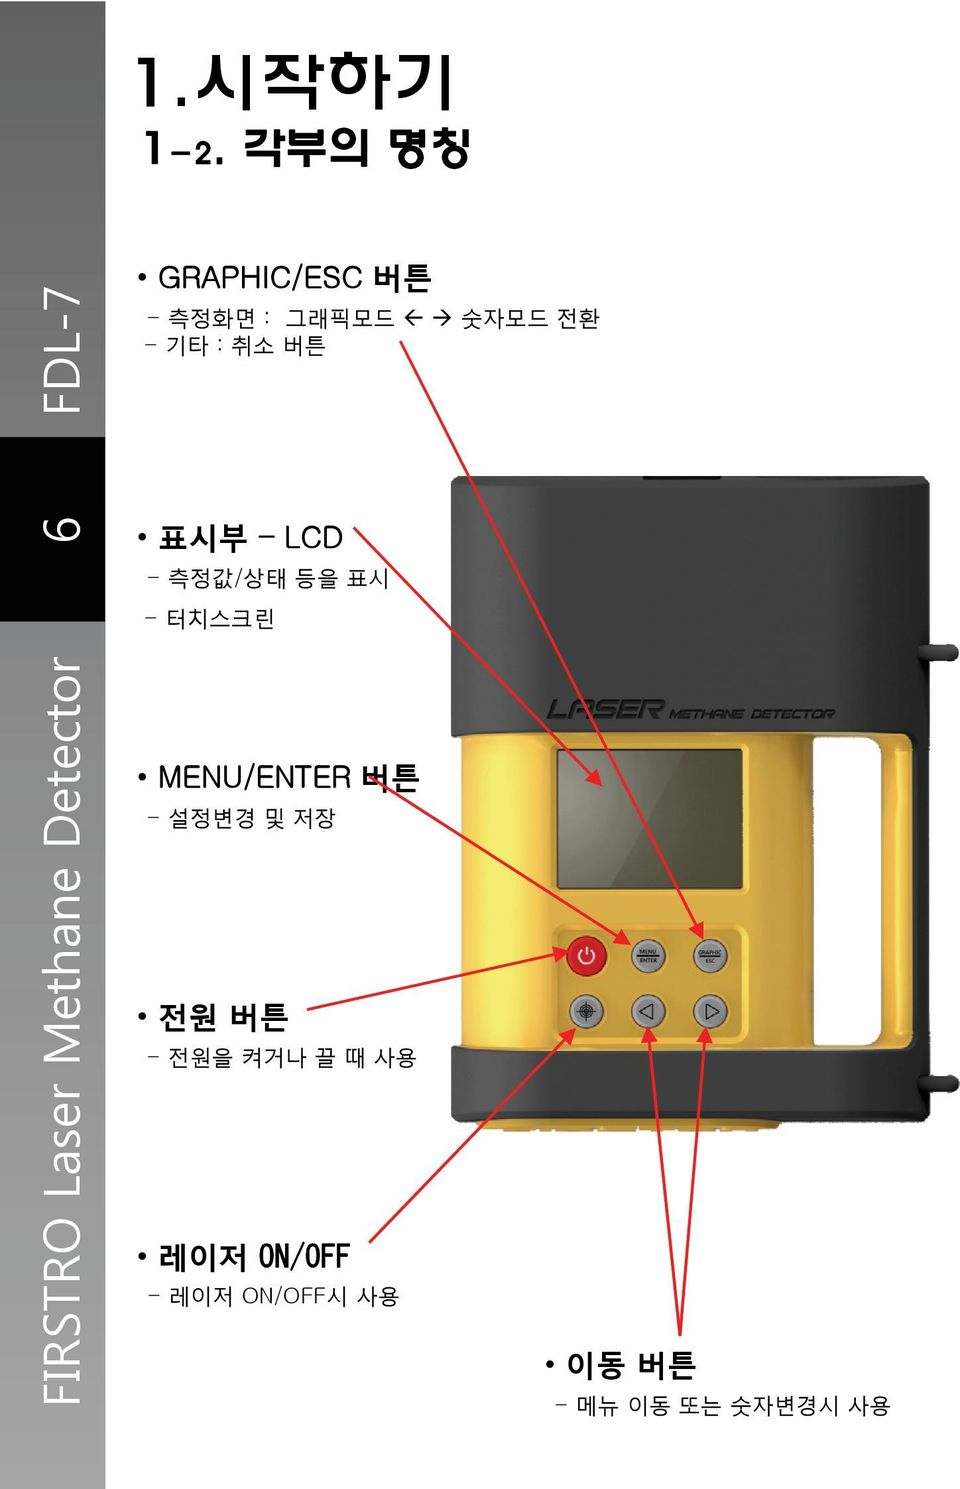 LCD - 측정값/상태 등을 표시 FIRSTRO Lase er Methane Detector - 터치스크린